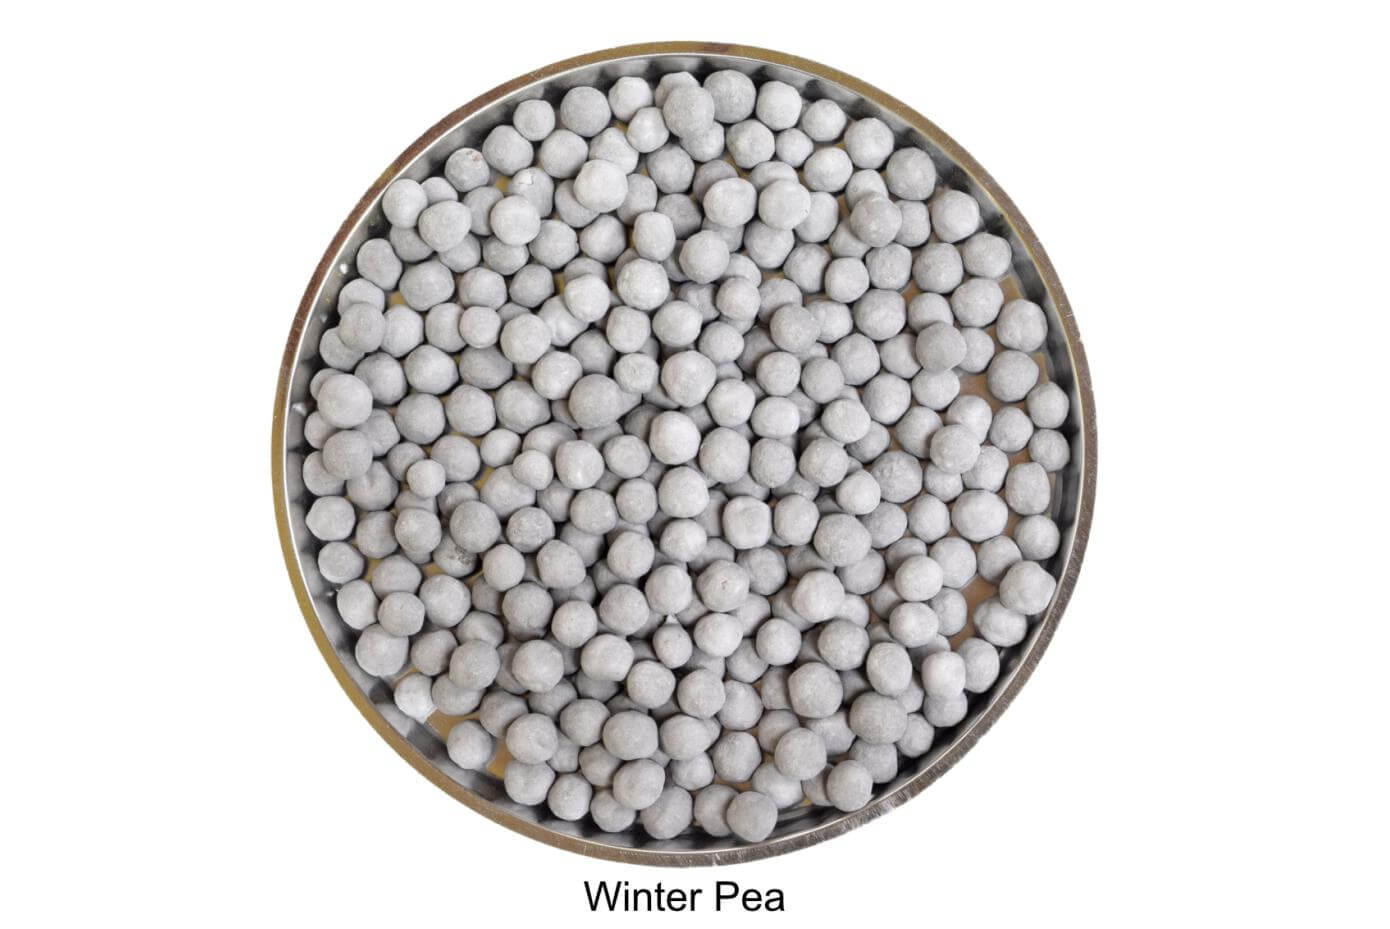 Coated winter pea seeds